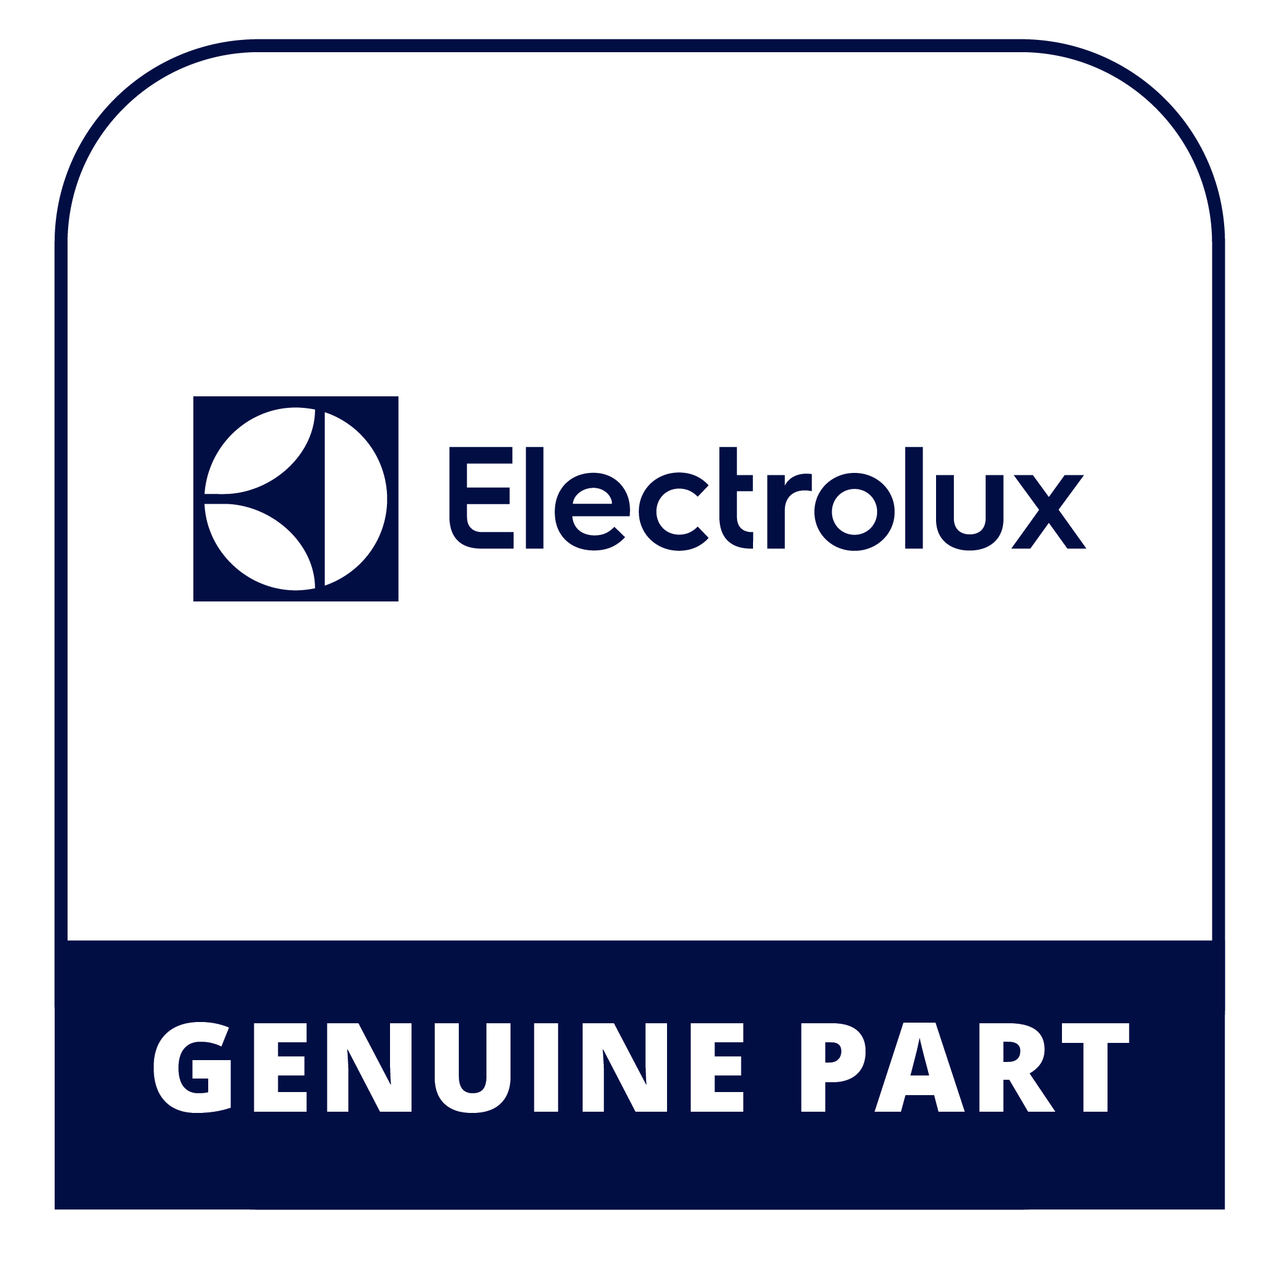 Frigidaire - Electrolux 316443911 - Board - Genuine Electrolux Part